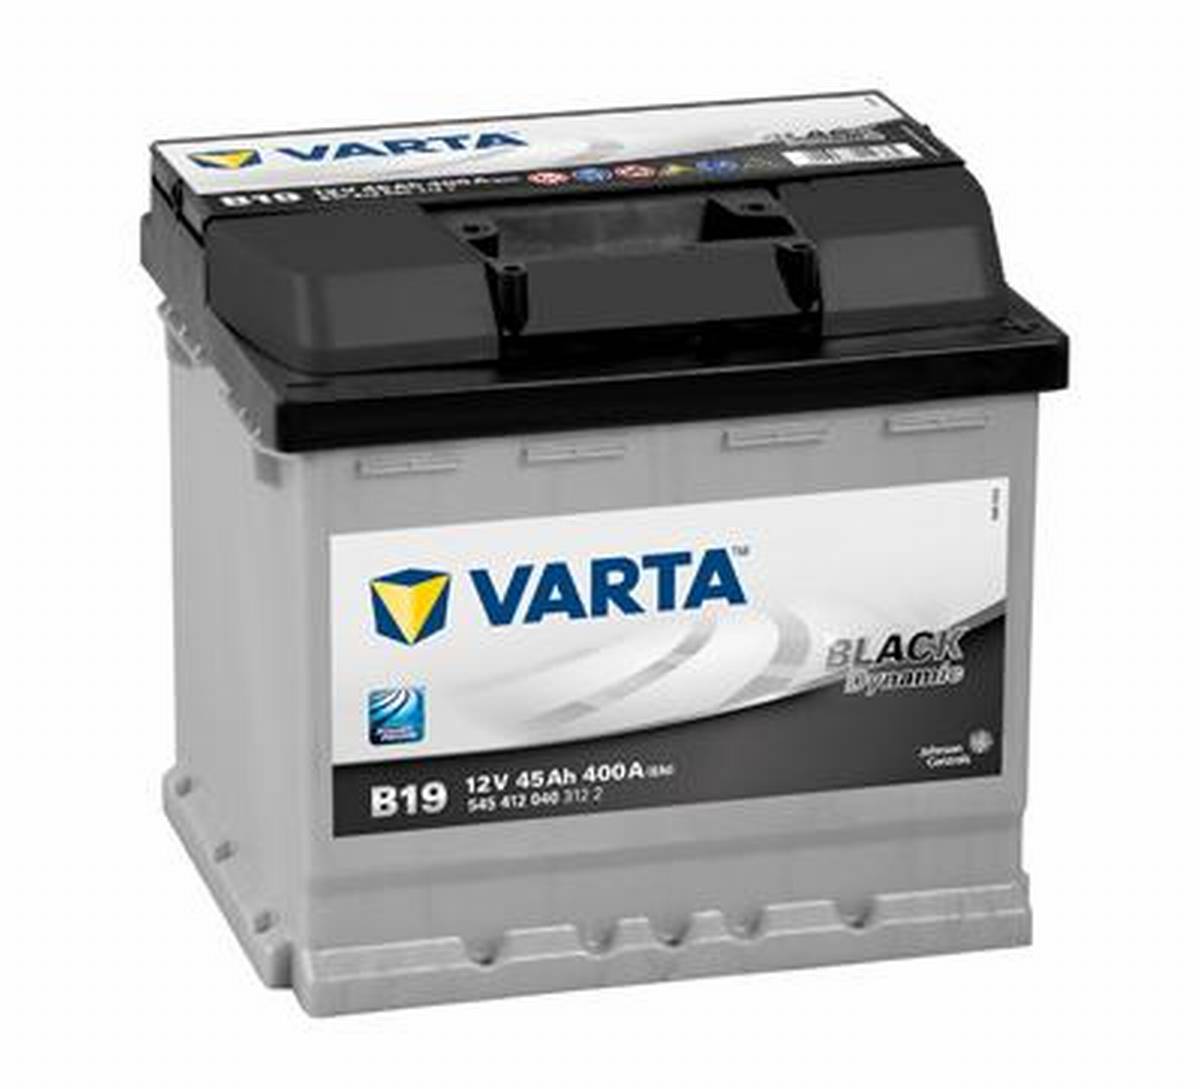 VARTA B19 Black Dynamic 12V 45Ah 400A Autobatterie 545 412 040